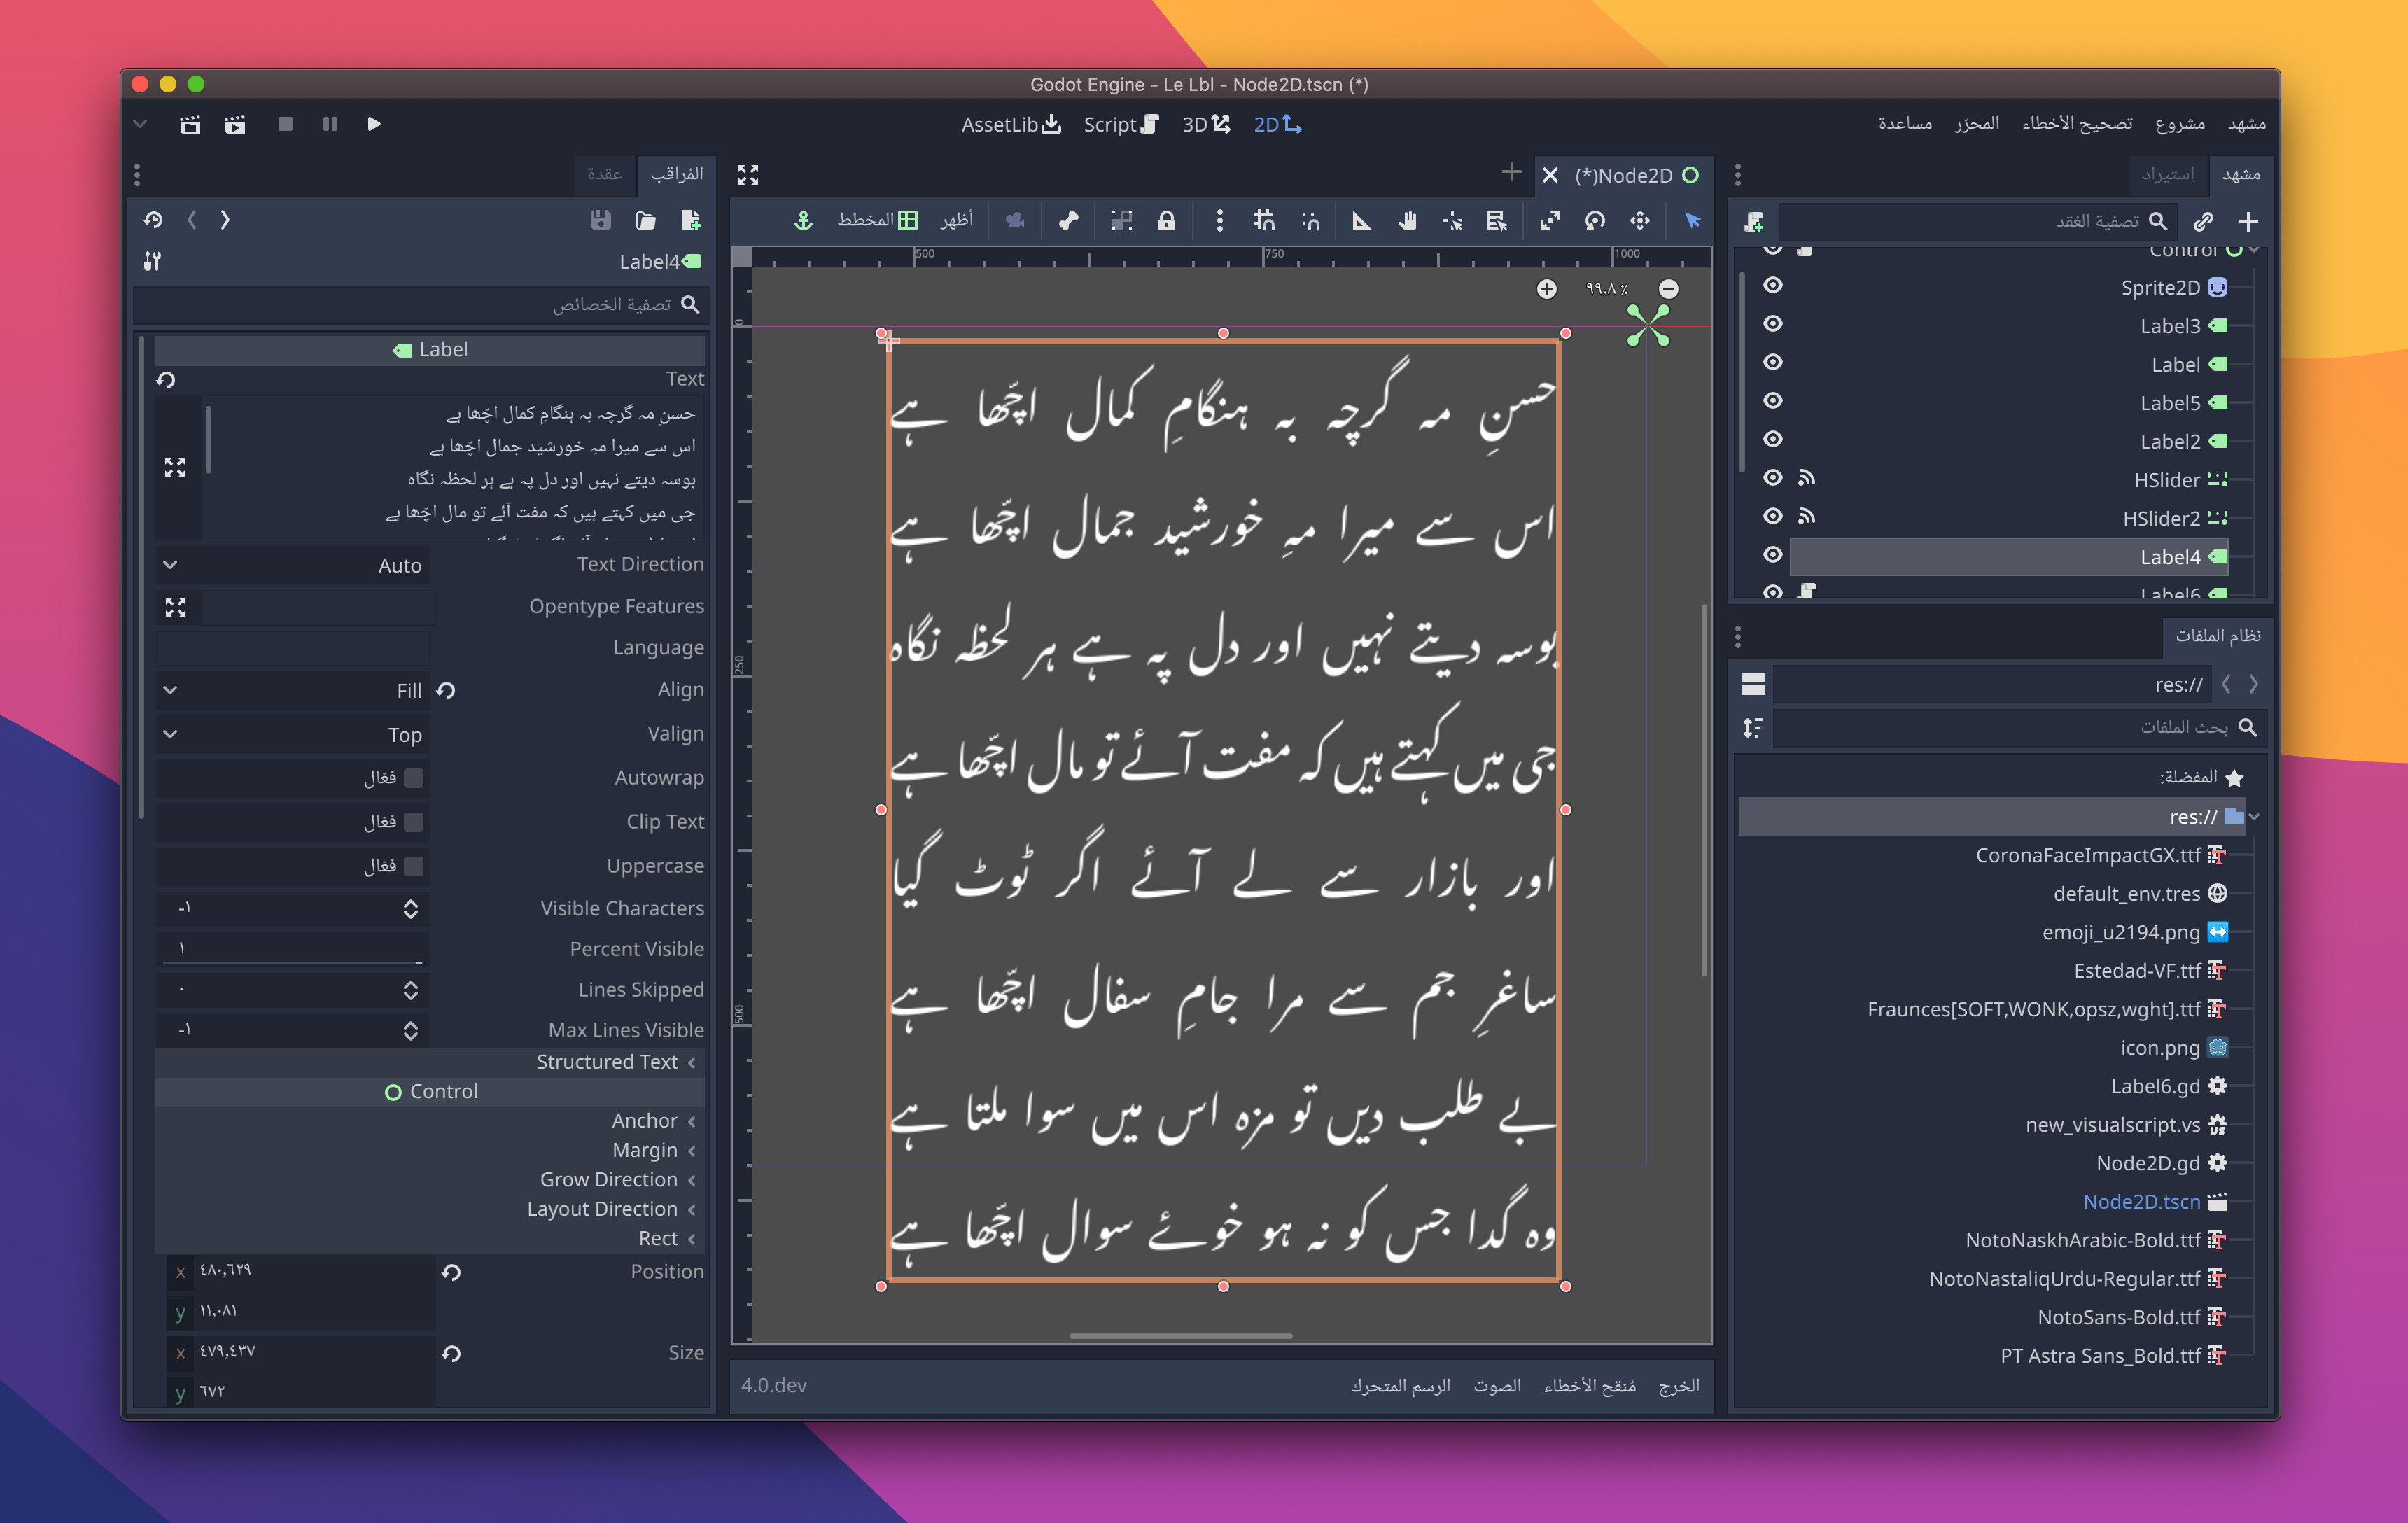 Screenshot of Urdu text in RichTextLabel in the editor using Arabic translations and UI mirroring